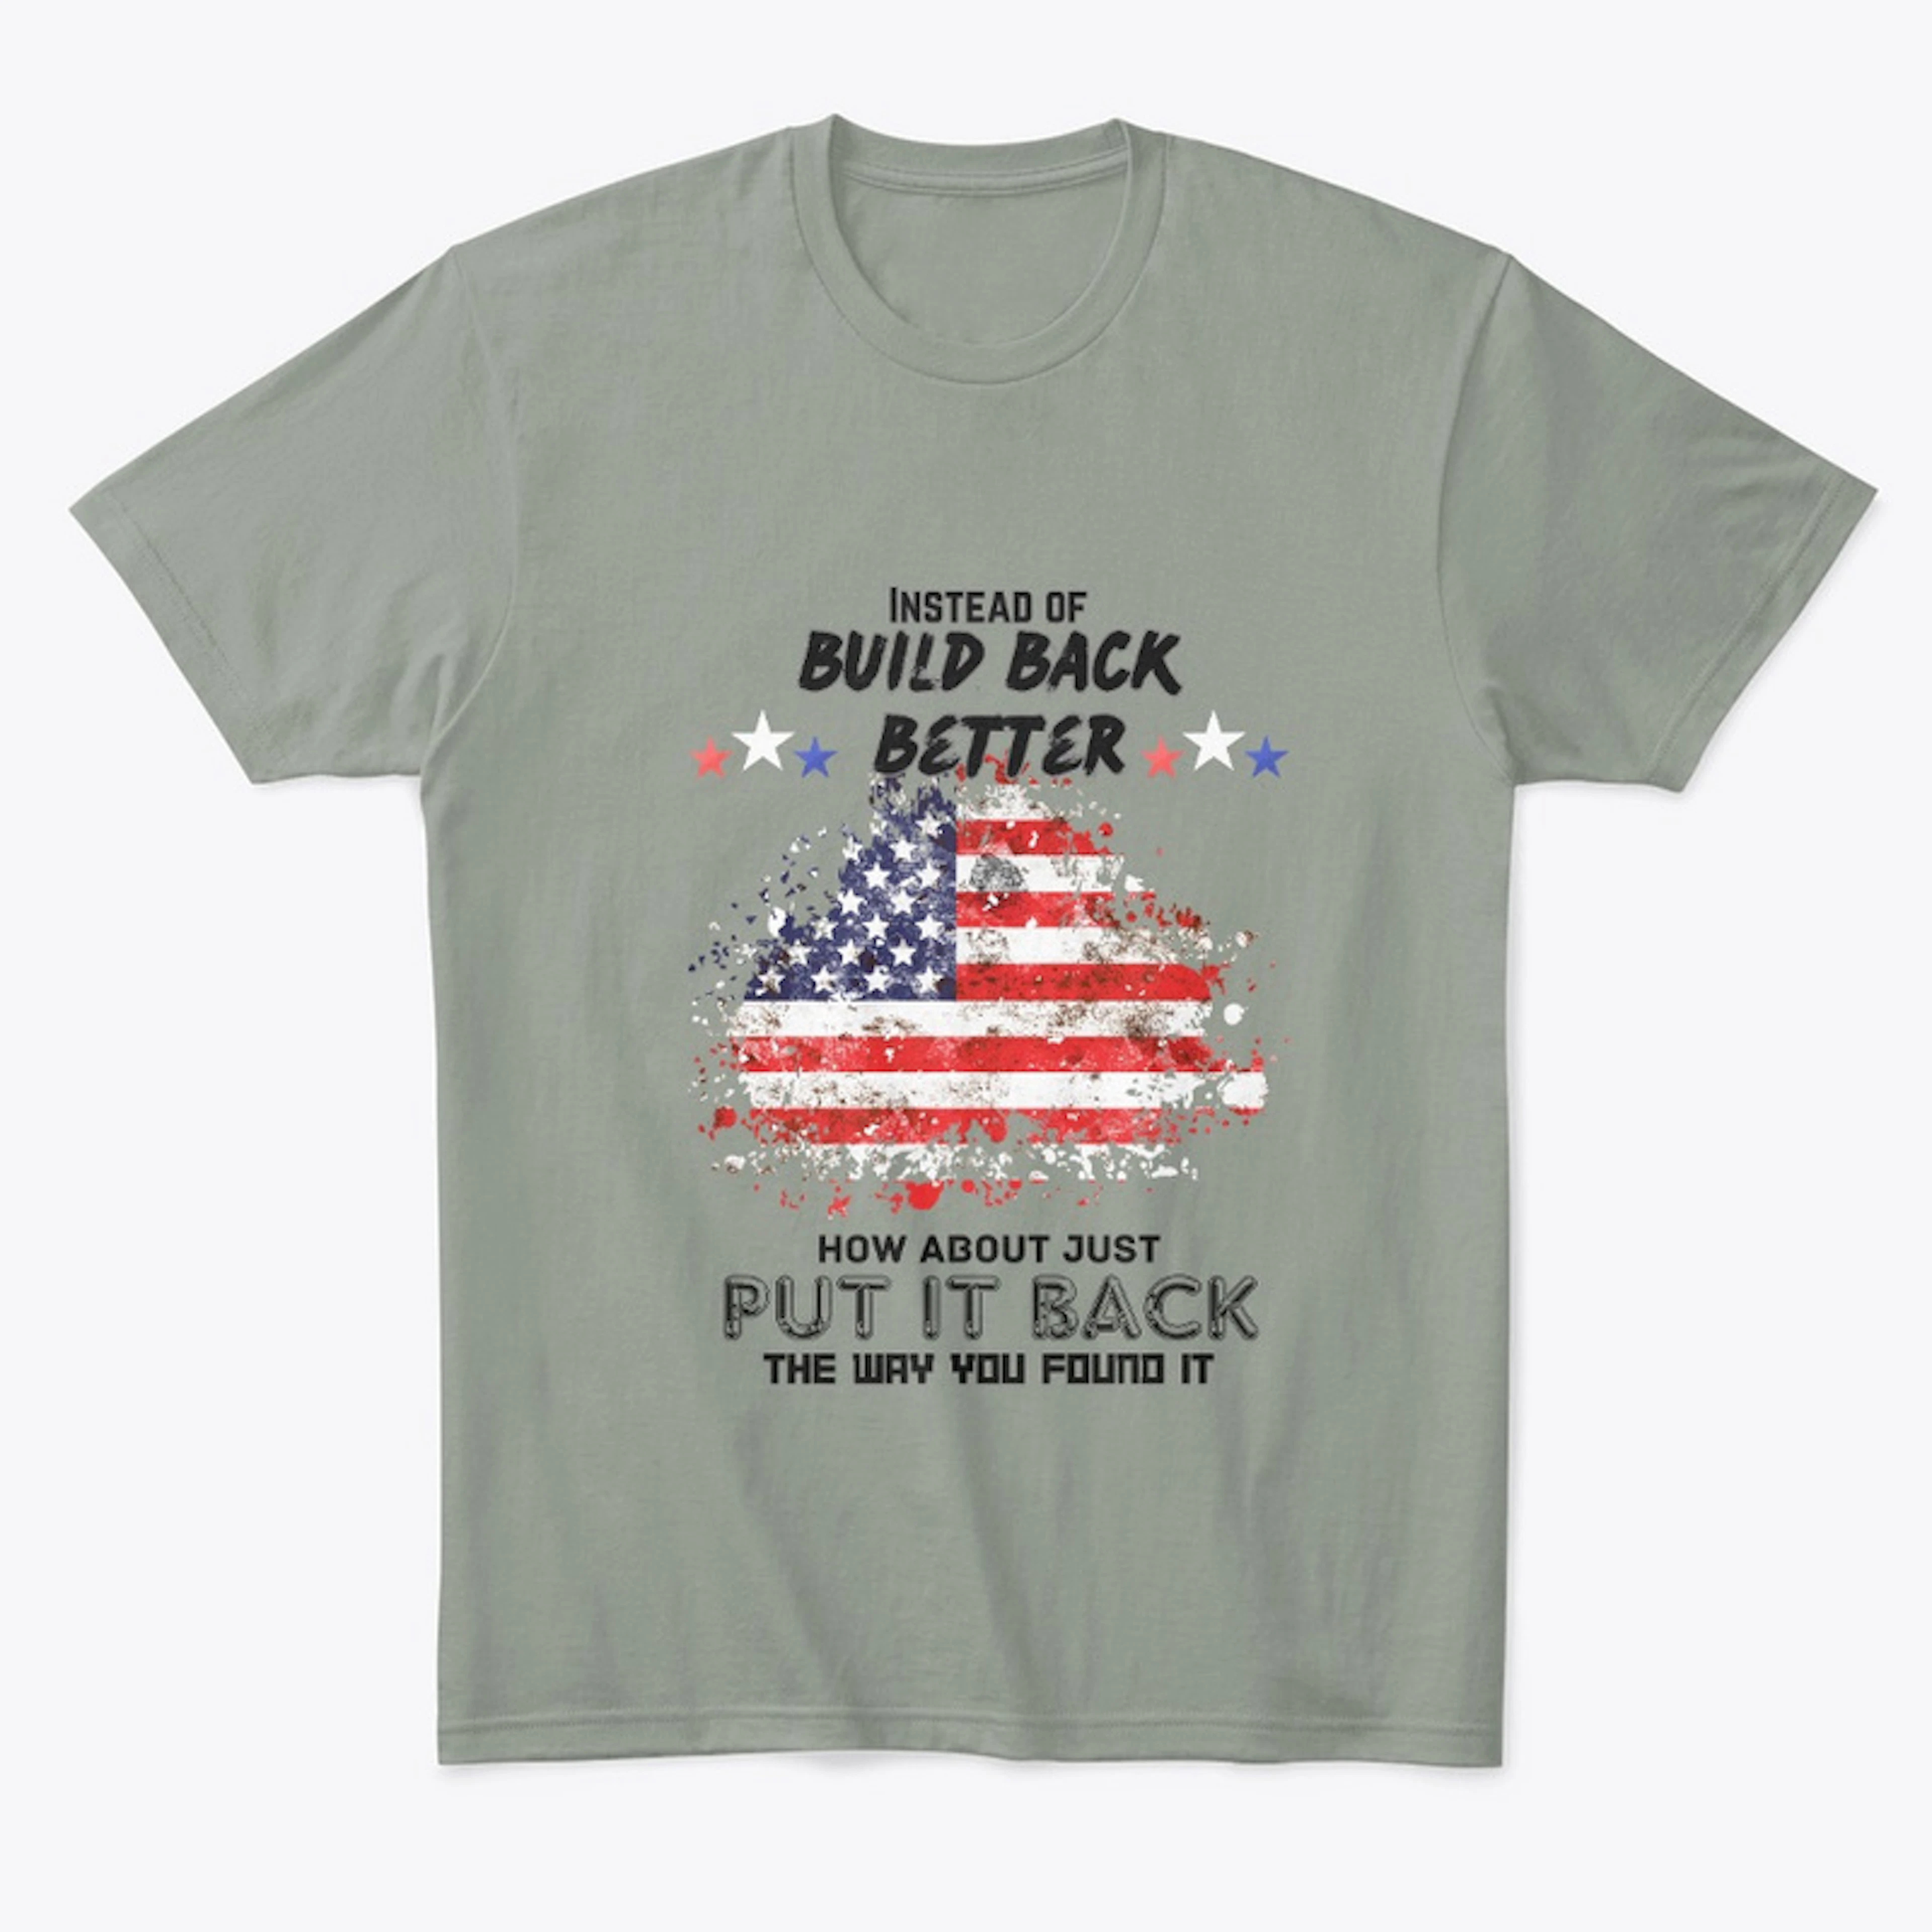 Instead of Build Back Better shirt